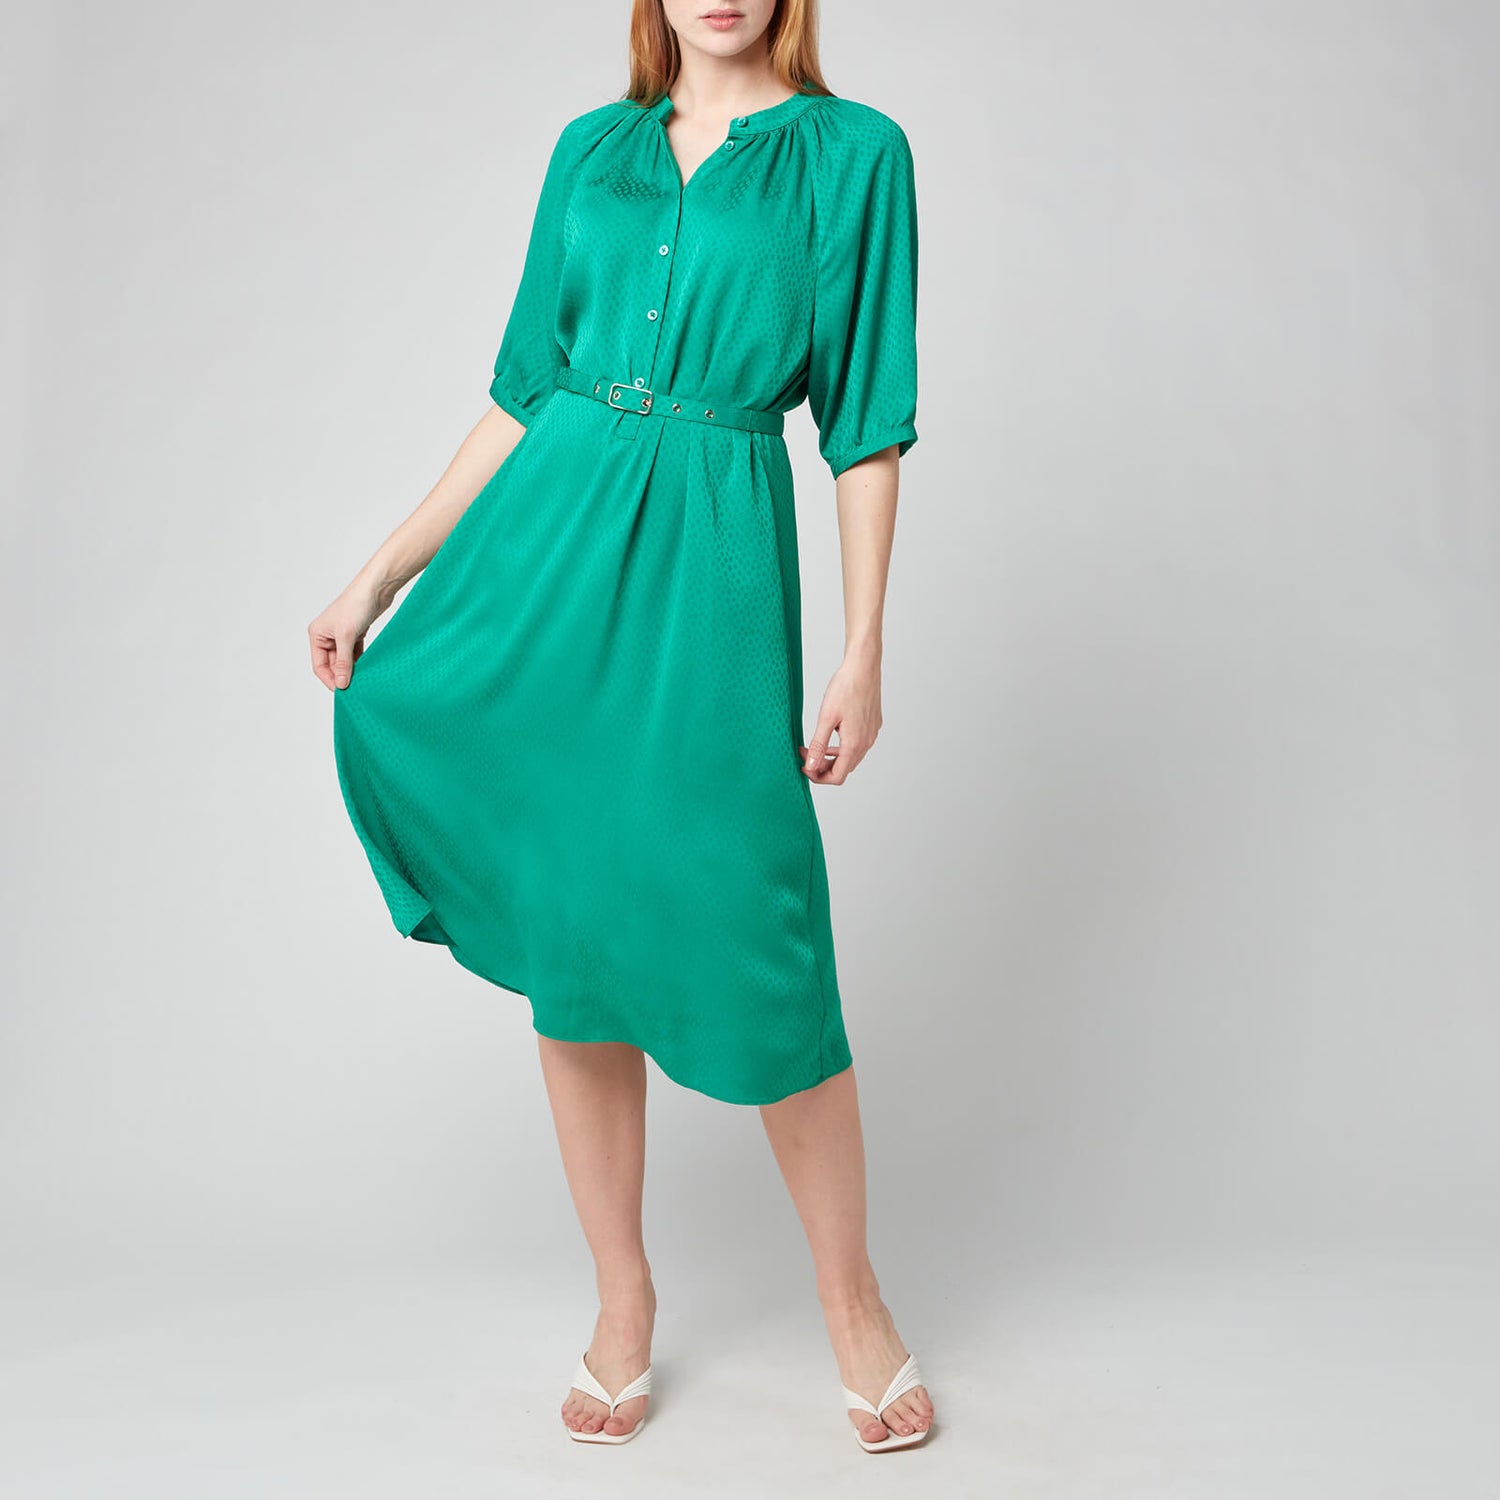 Kate Spade New York Women's Fluid Jacquard Midi Dress - Beryl Green